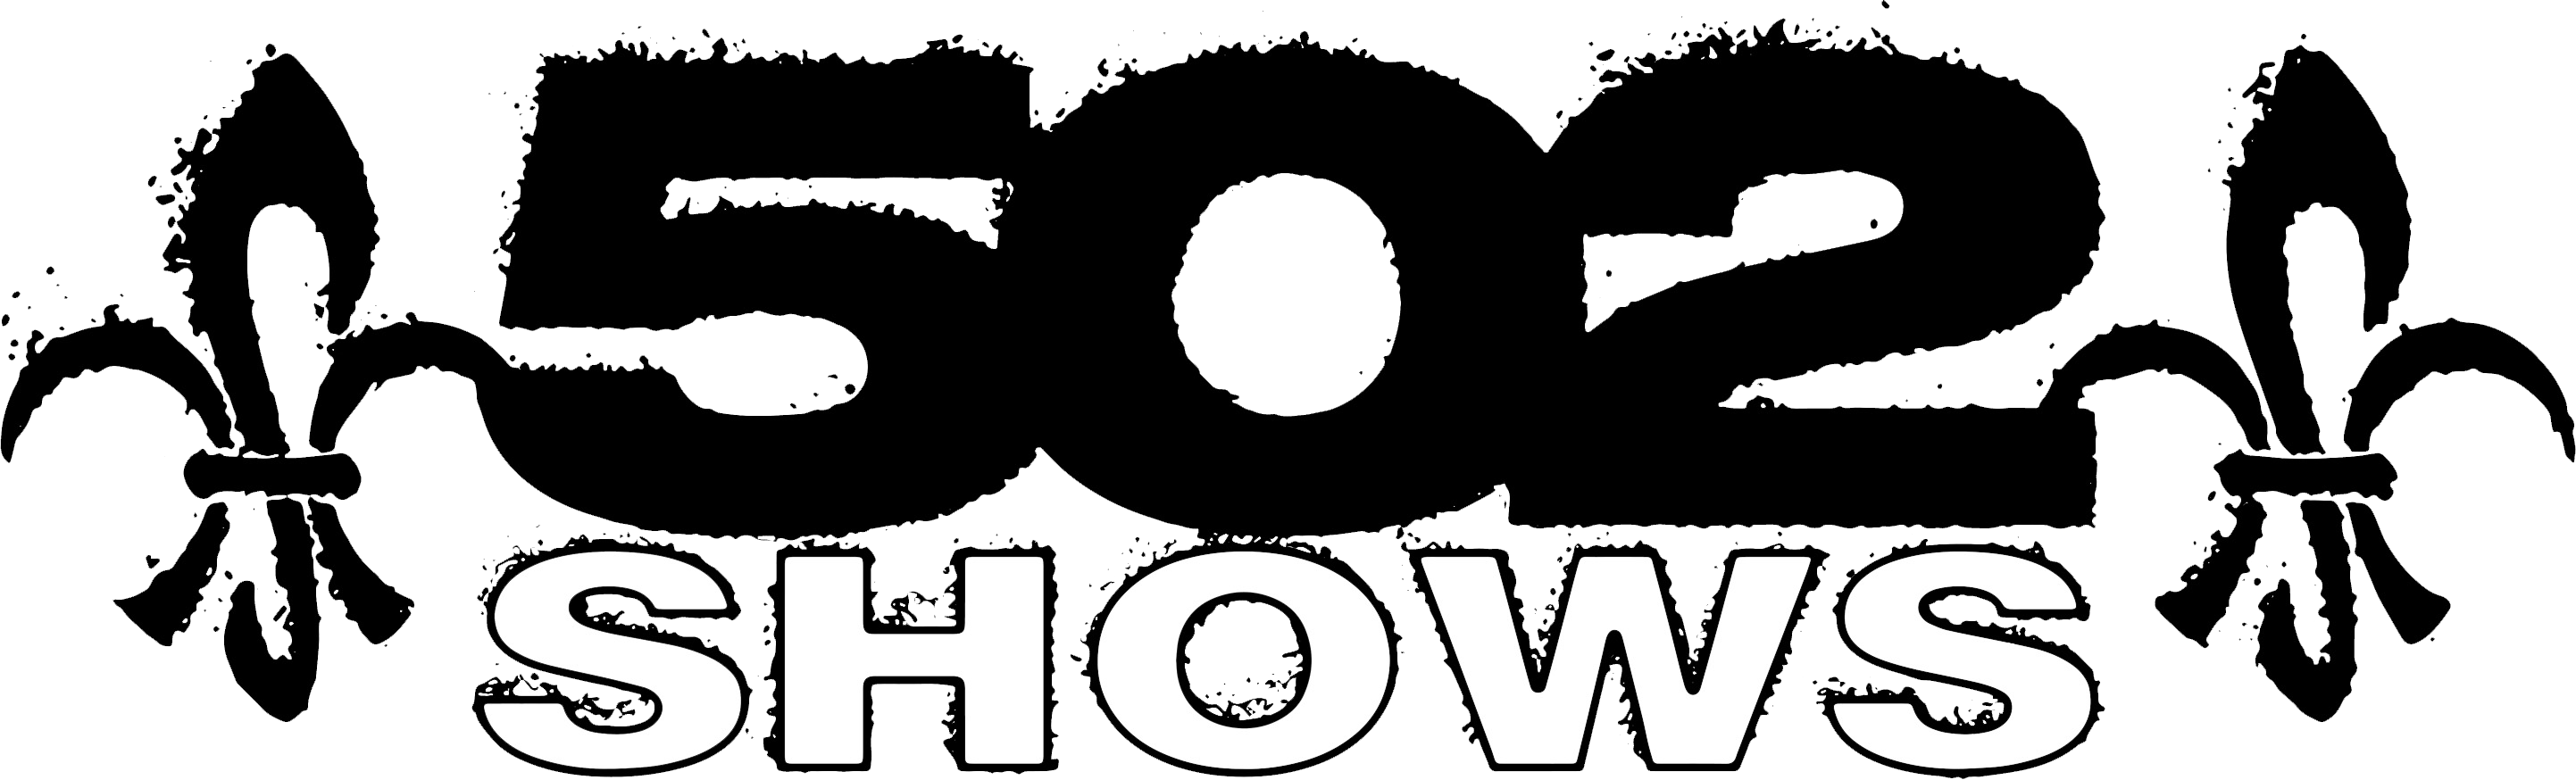 502 Shows Logo